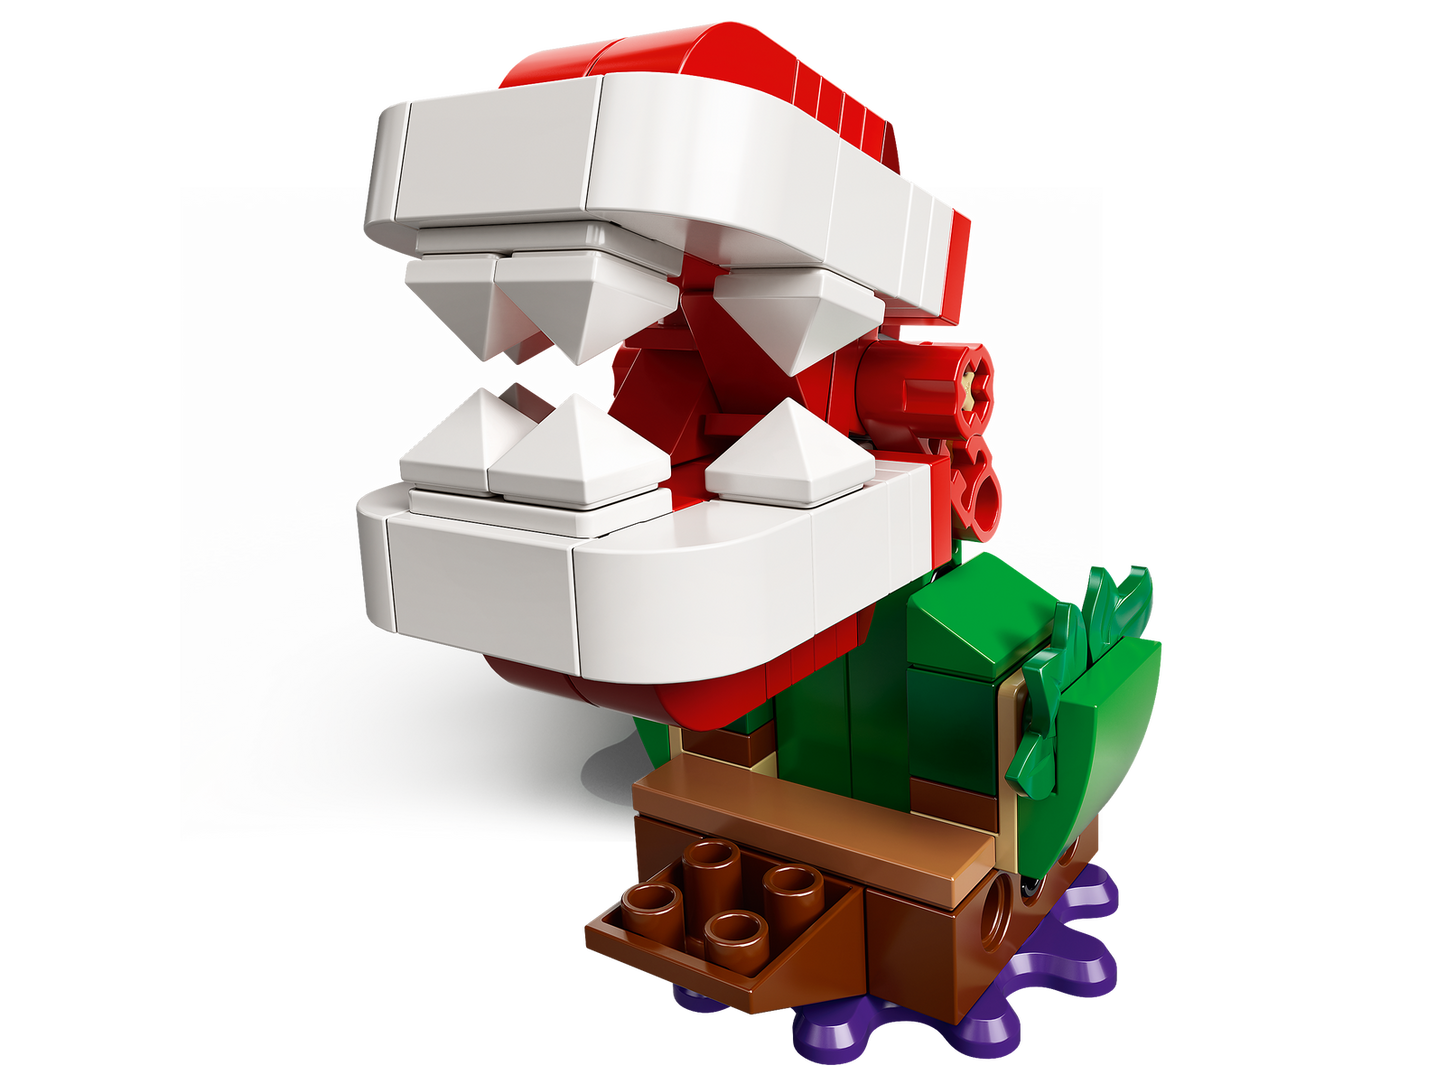 LEGO Super Mario Piranha Plant Puzzling Challenge Expansion Set 71382